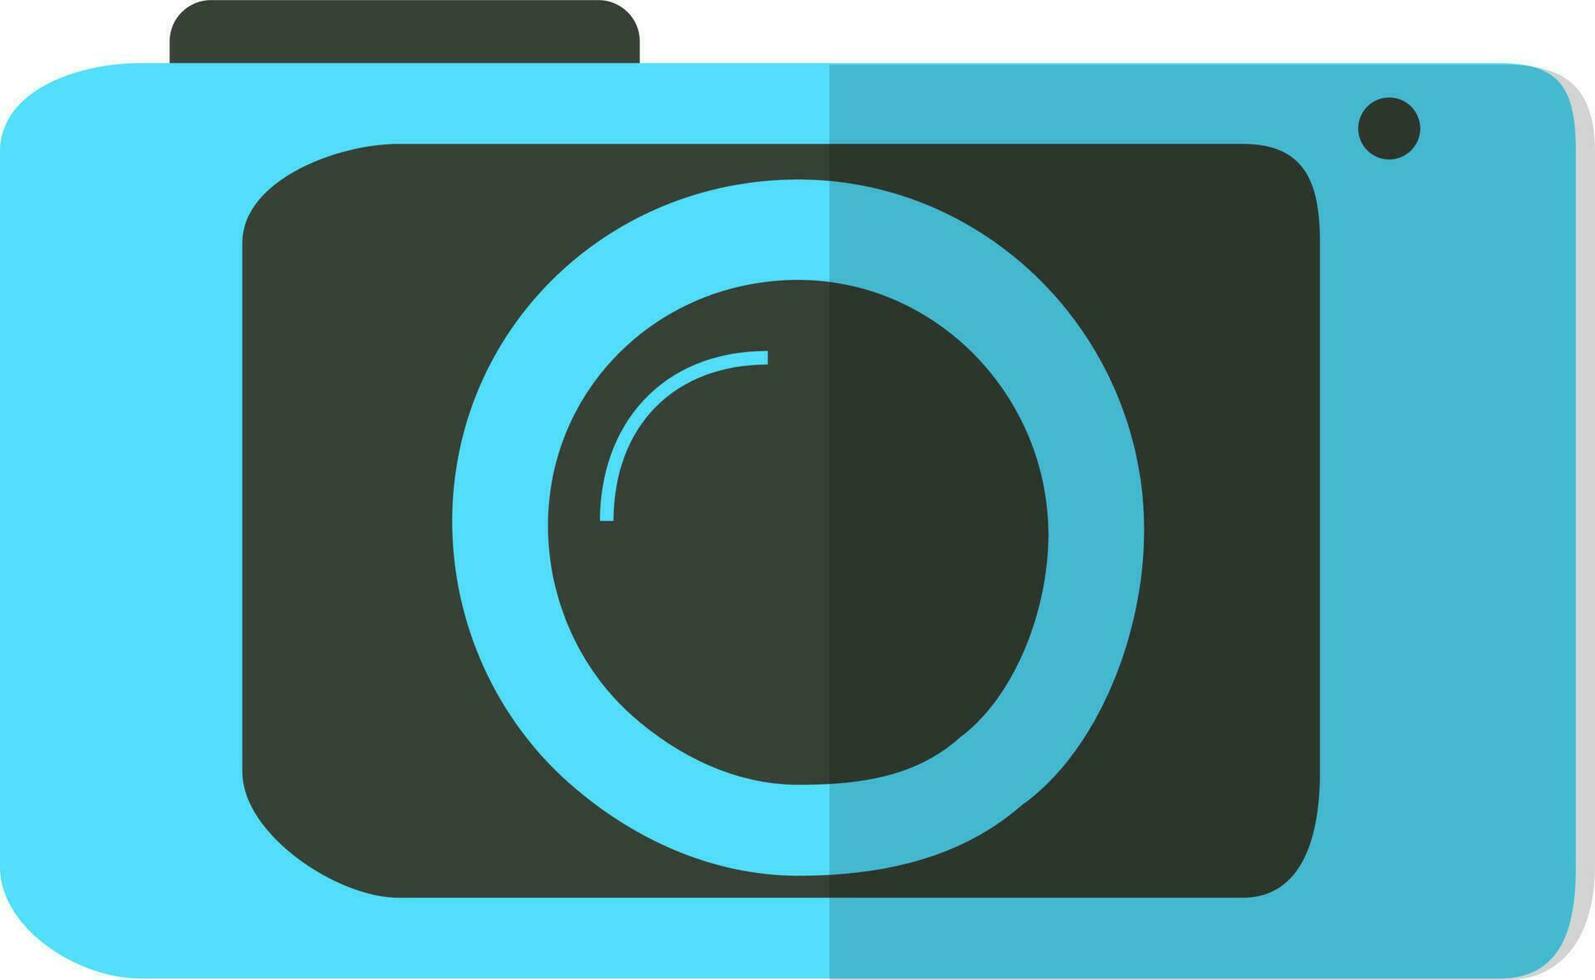 nero e blu digitale telecamera. vettore